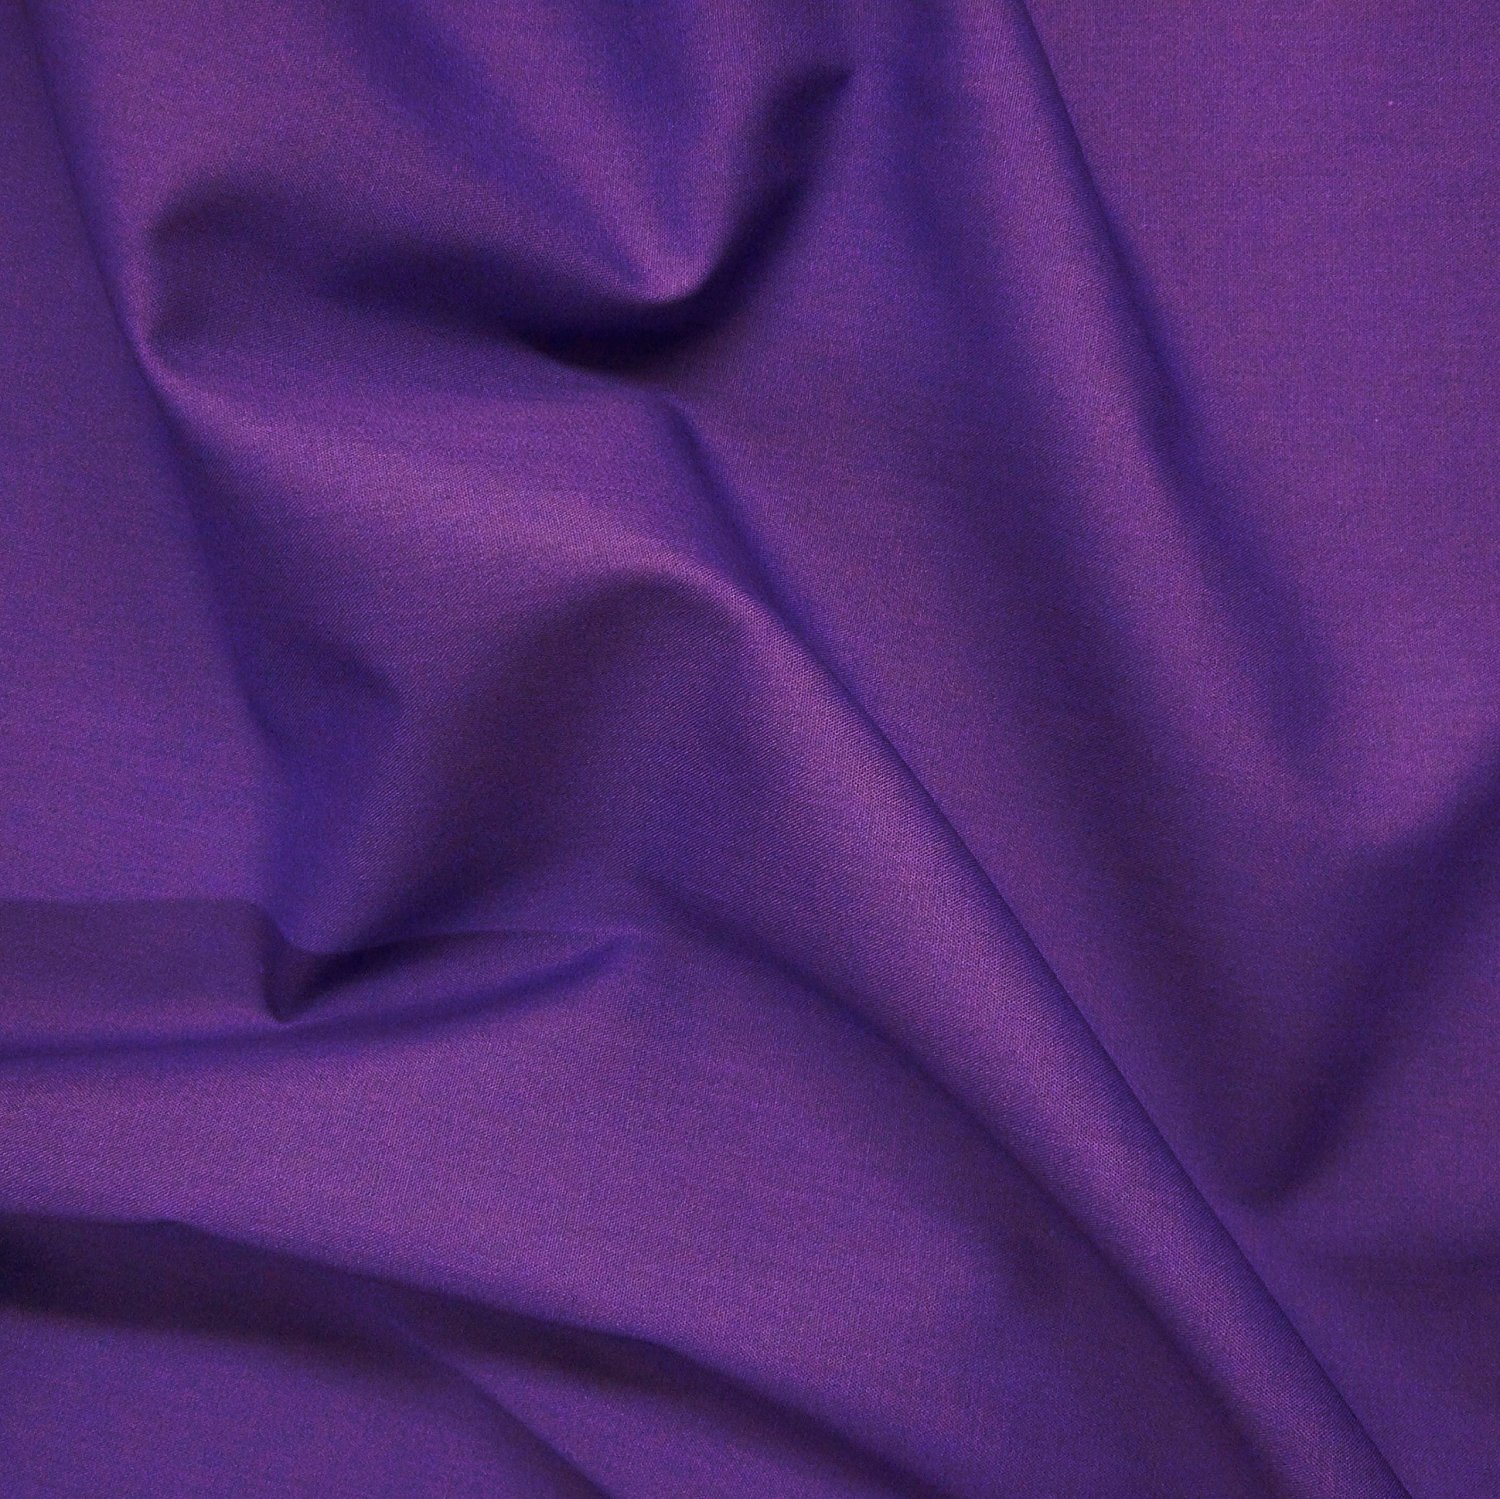 Purple fabric photo